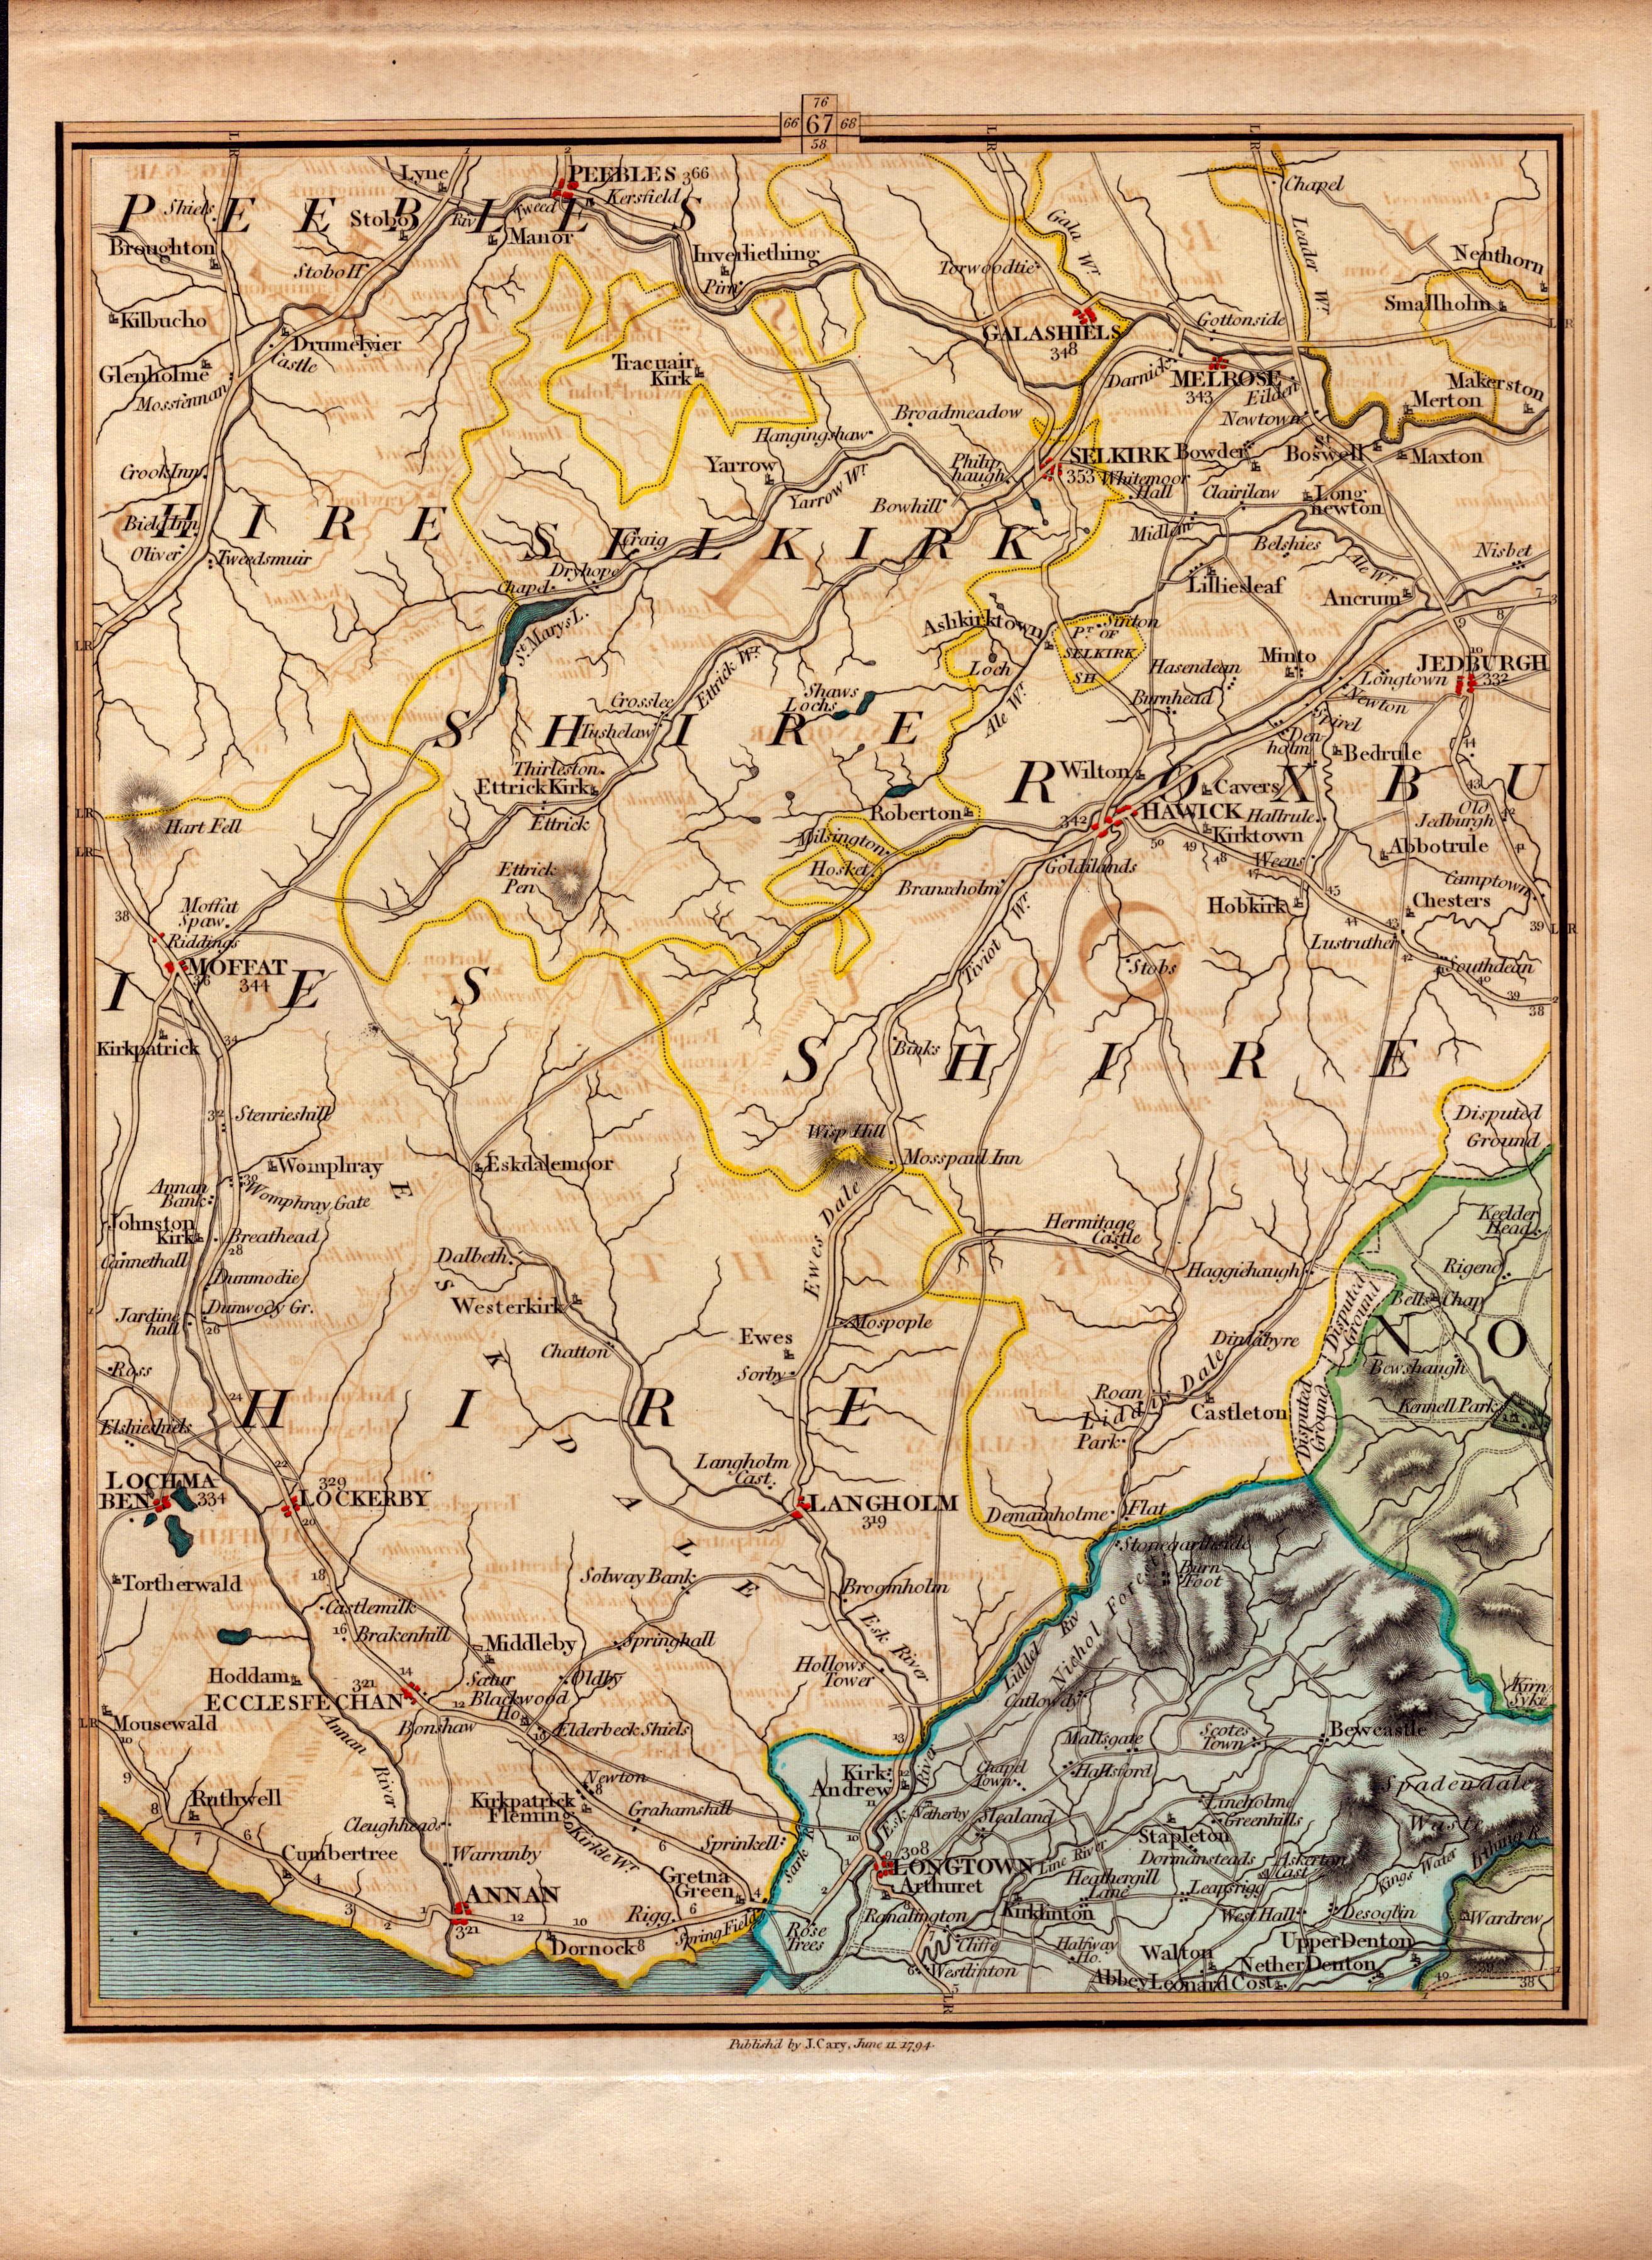 Gretna Green Jedburgh Lockerbie Selkirk John Cary’s Antique 1794 Map.